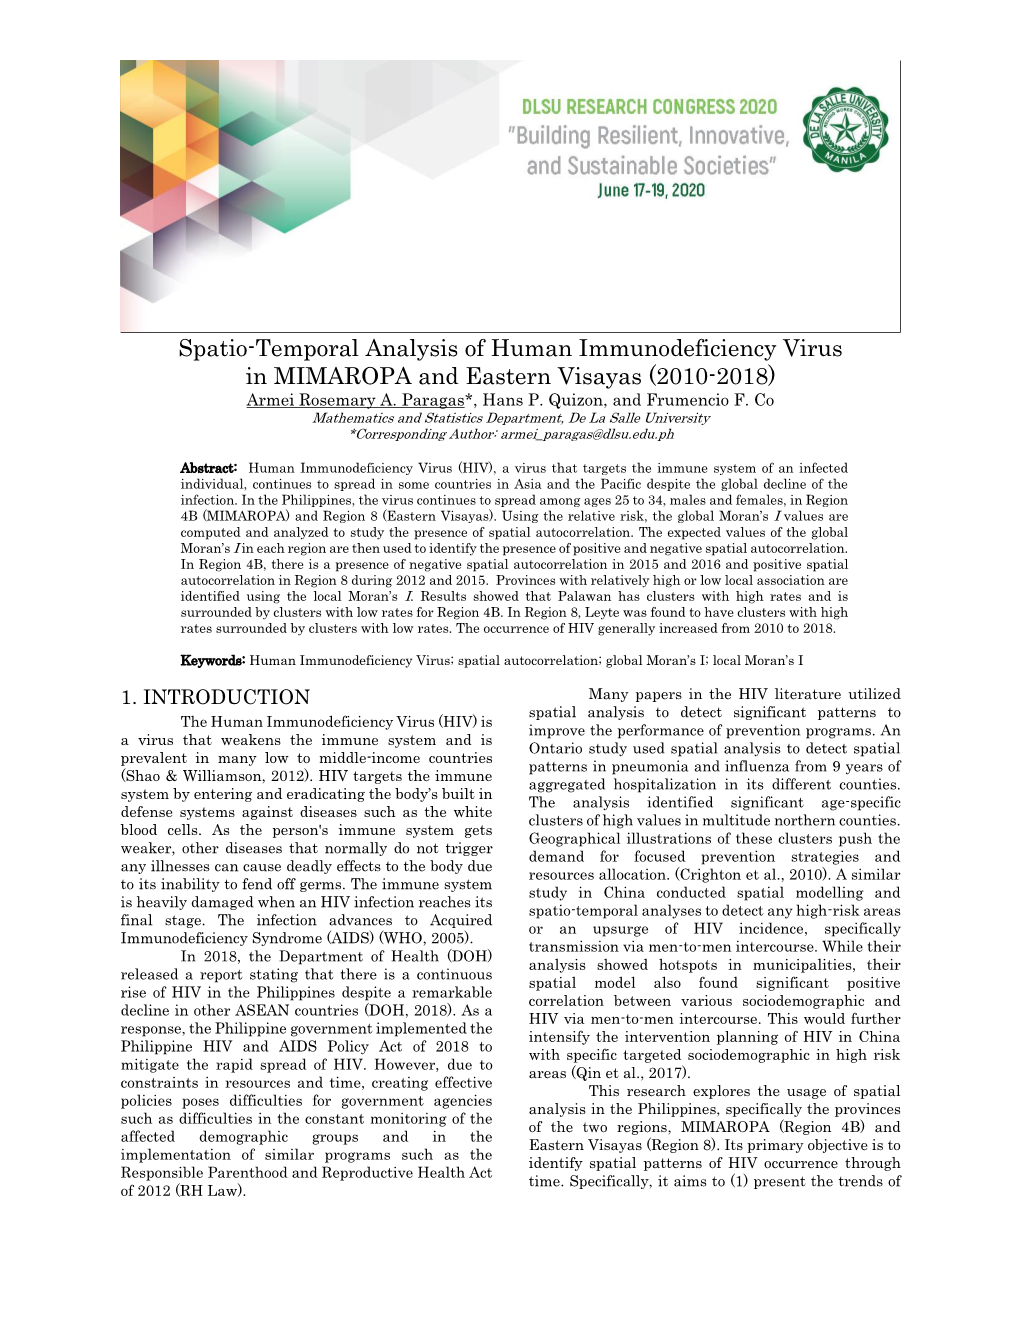 Spatio-Temporal Analysis of Human Immunodeficiency Virus in MIMAROPA and Eastern Visayas (2010-2018) Armei Rosemary A